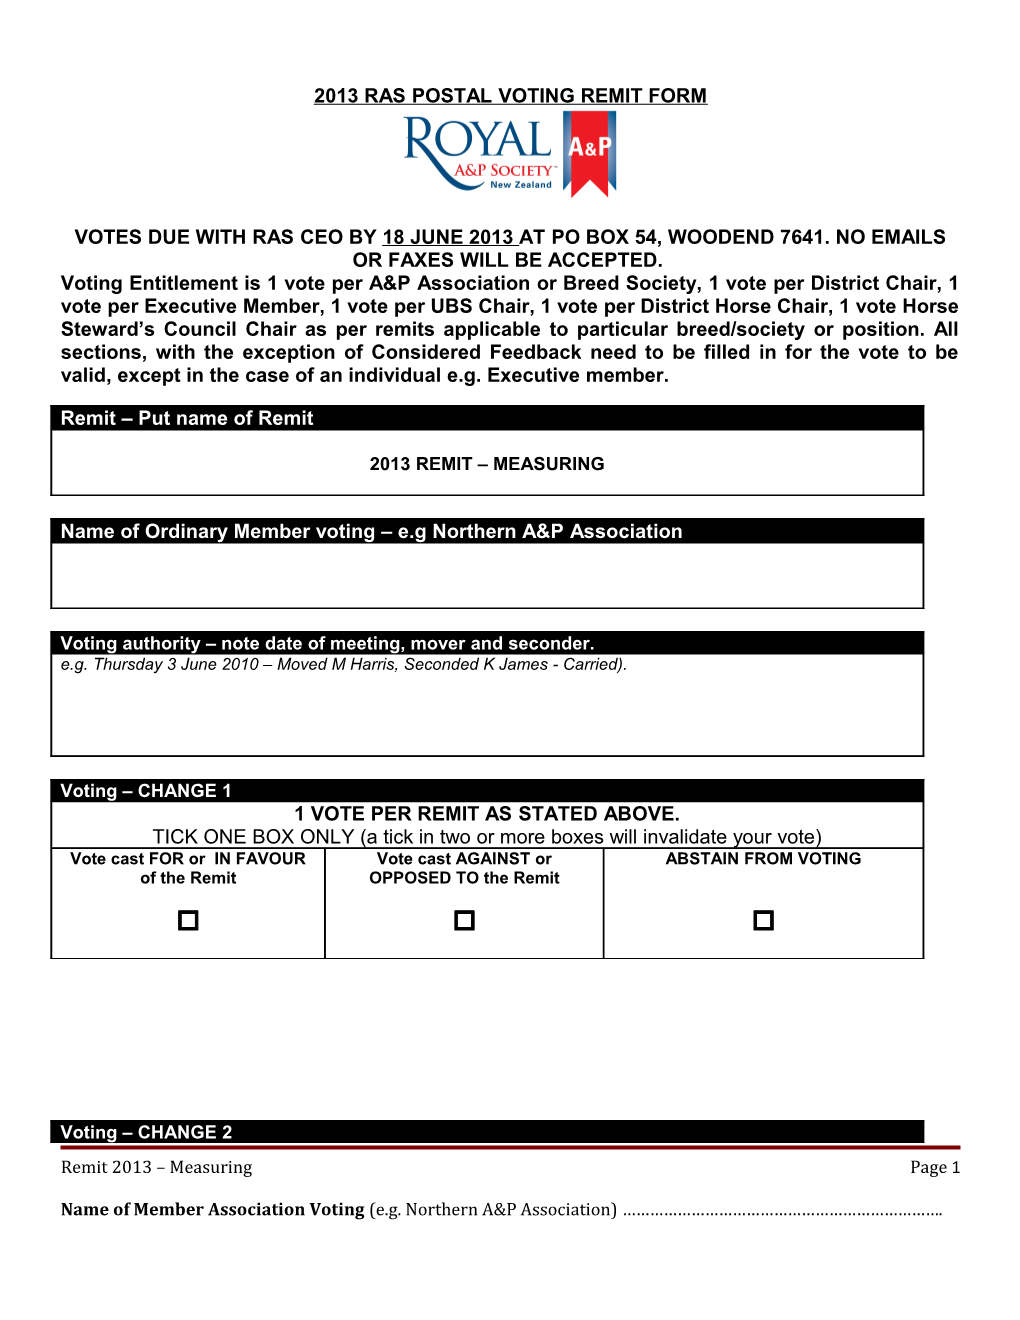 Form 2 - Recording Your Vote